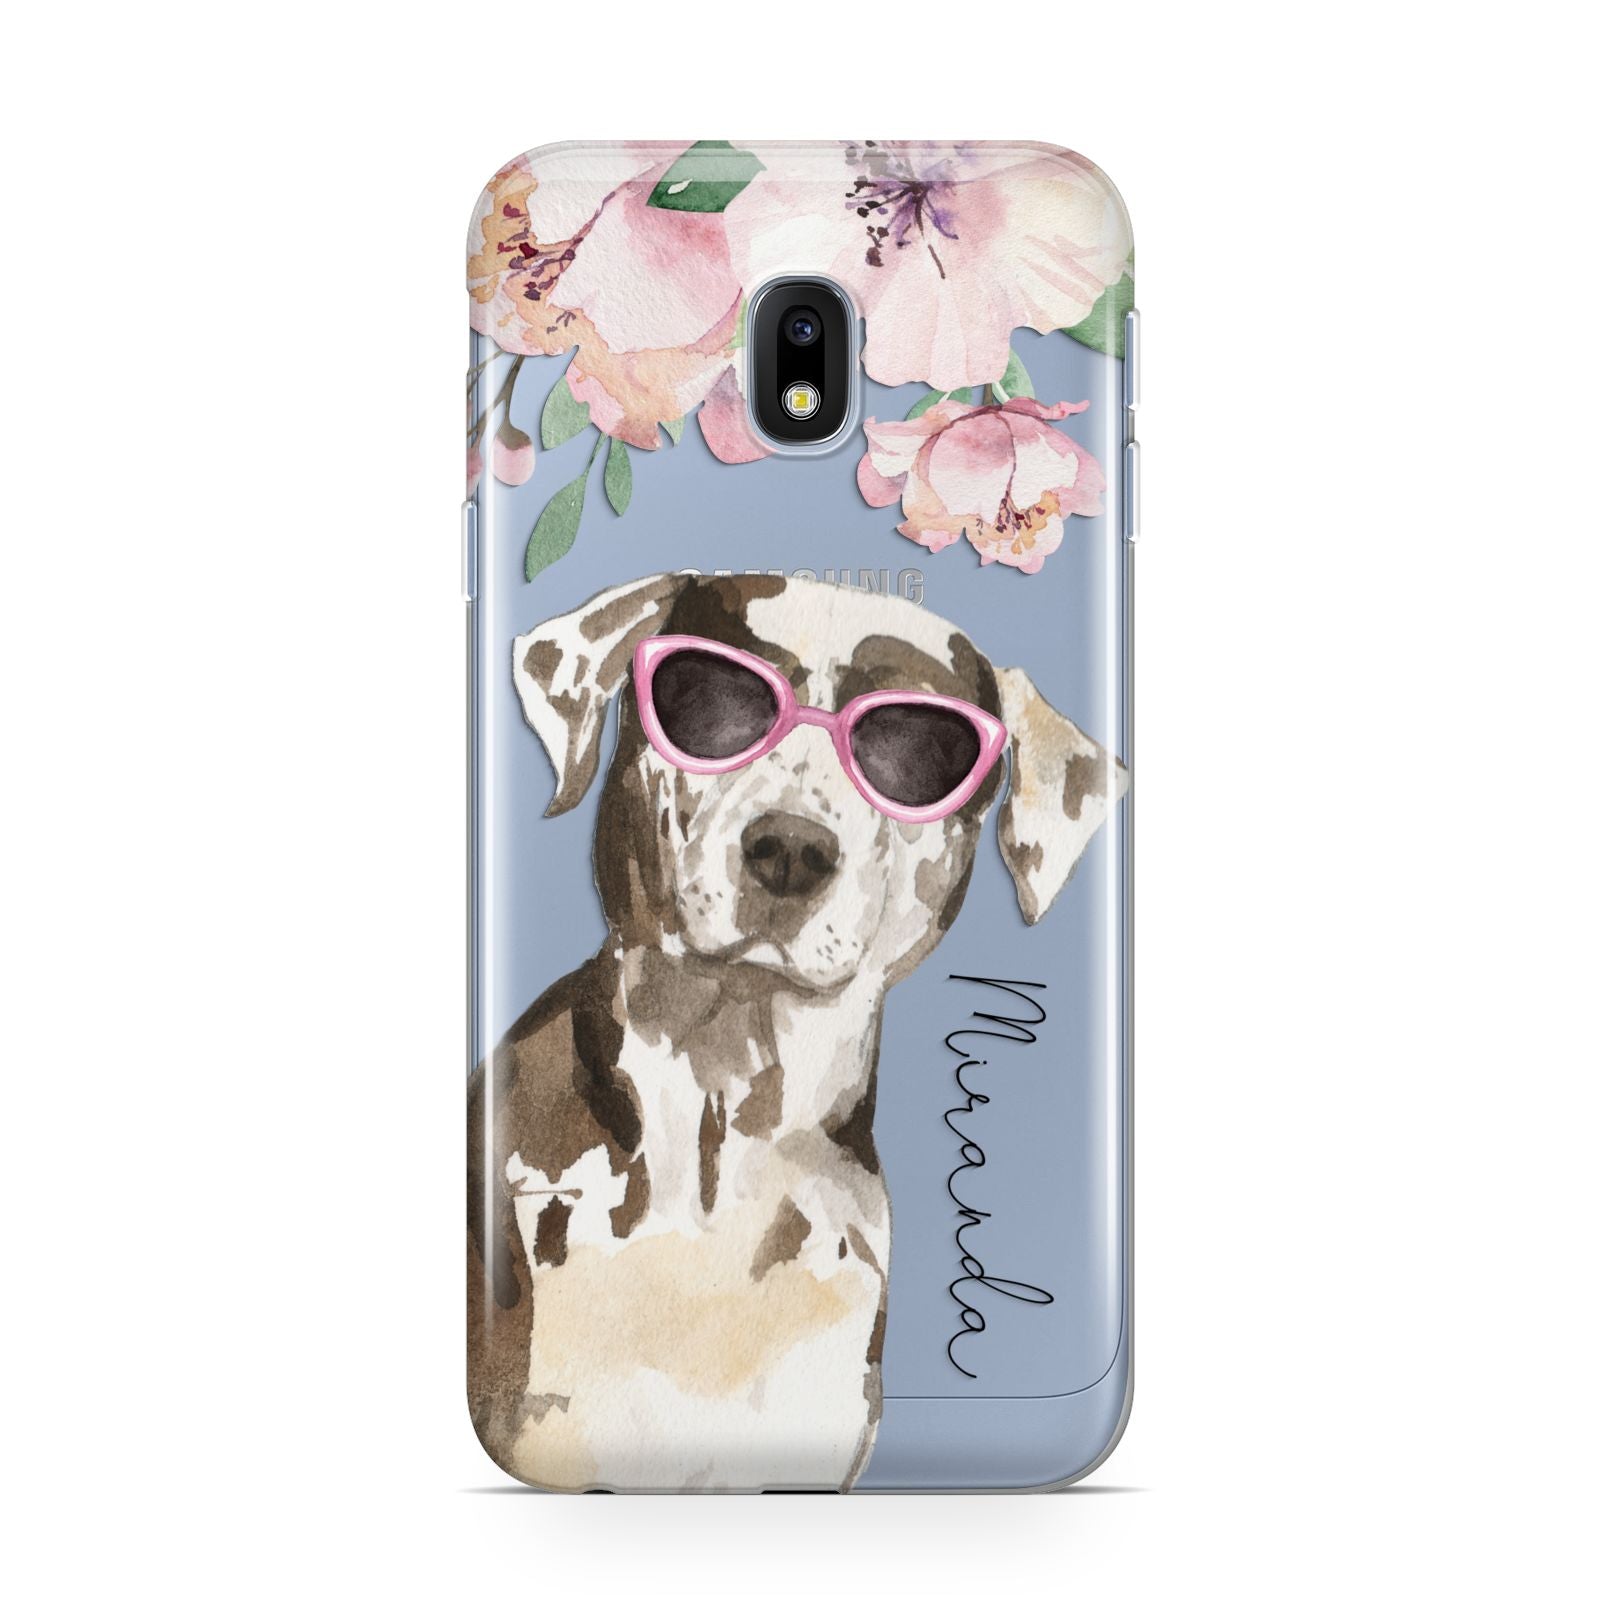 Personalised Catahoula Leopard Dog Samsung Galaxy J3 2017 Case